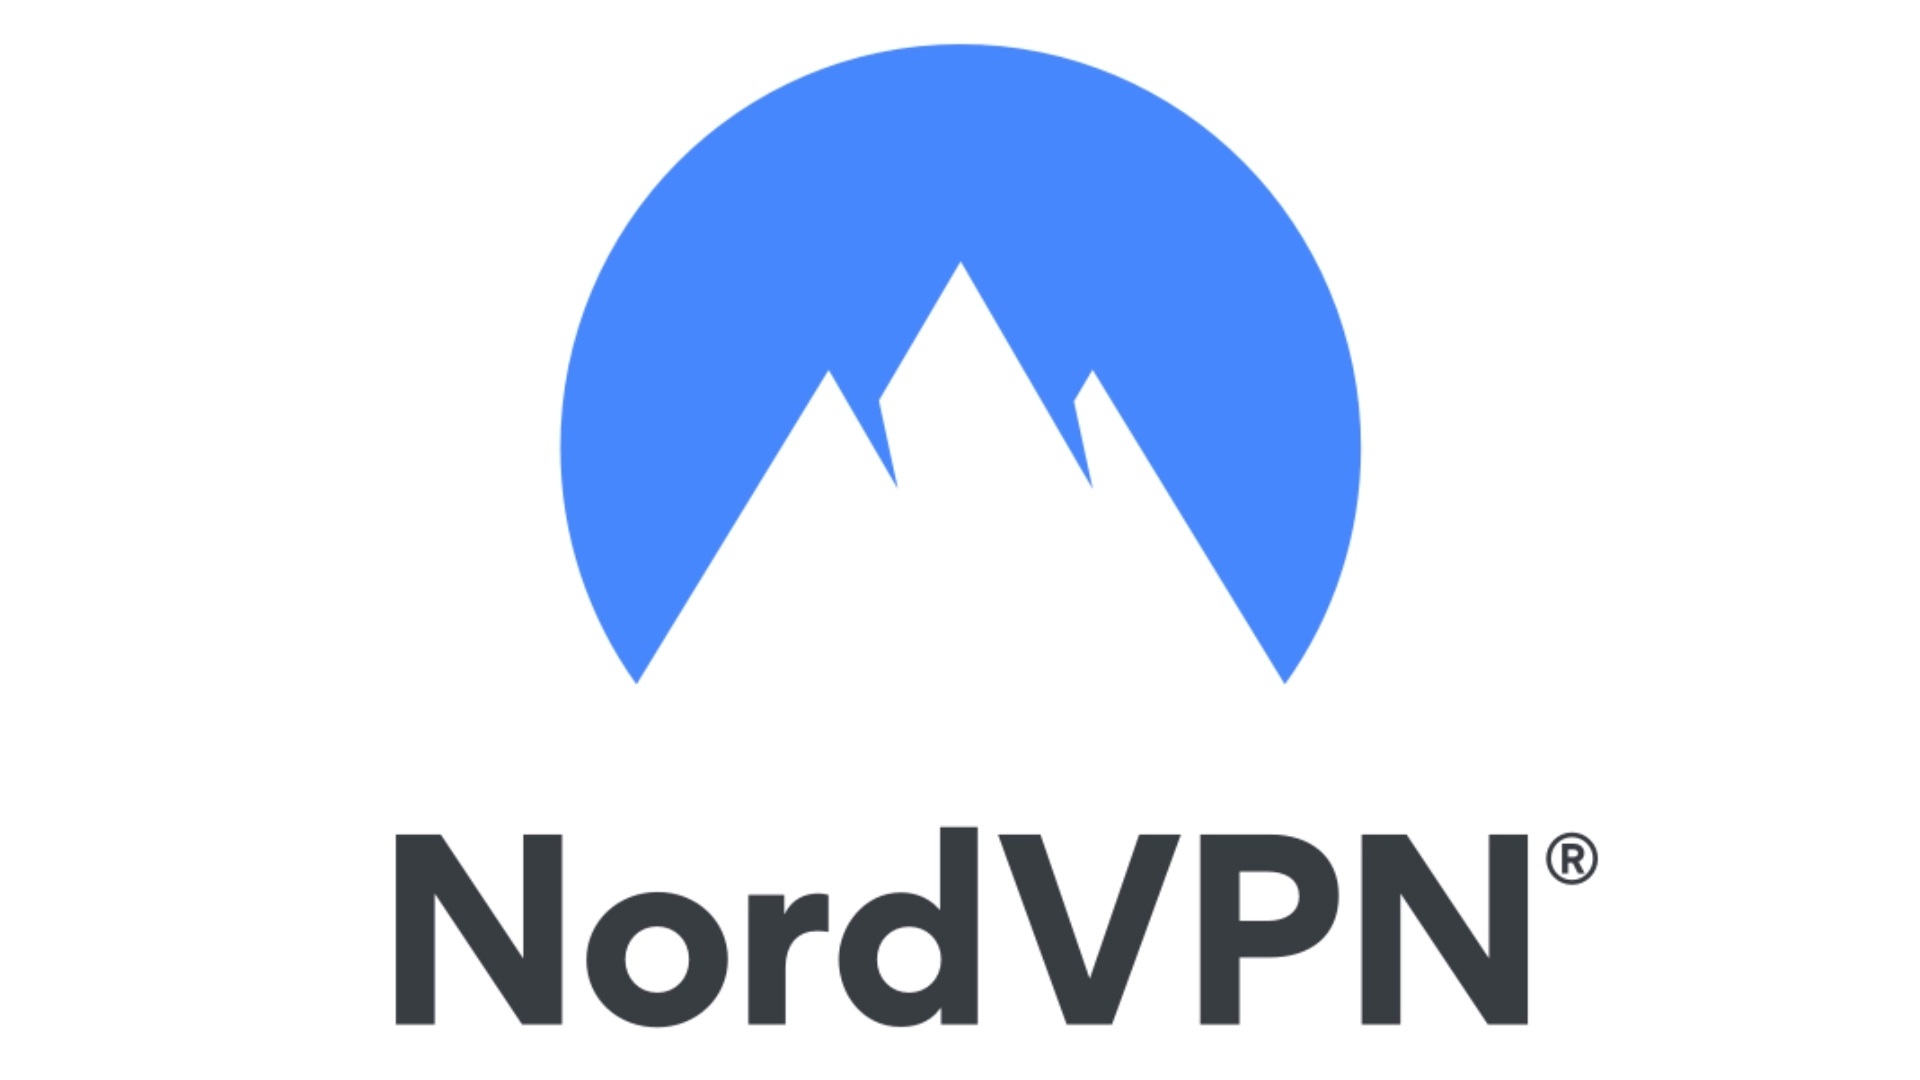 Best Linux VPN: NordVPN. Image shows the company logo.